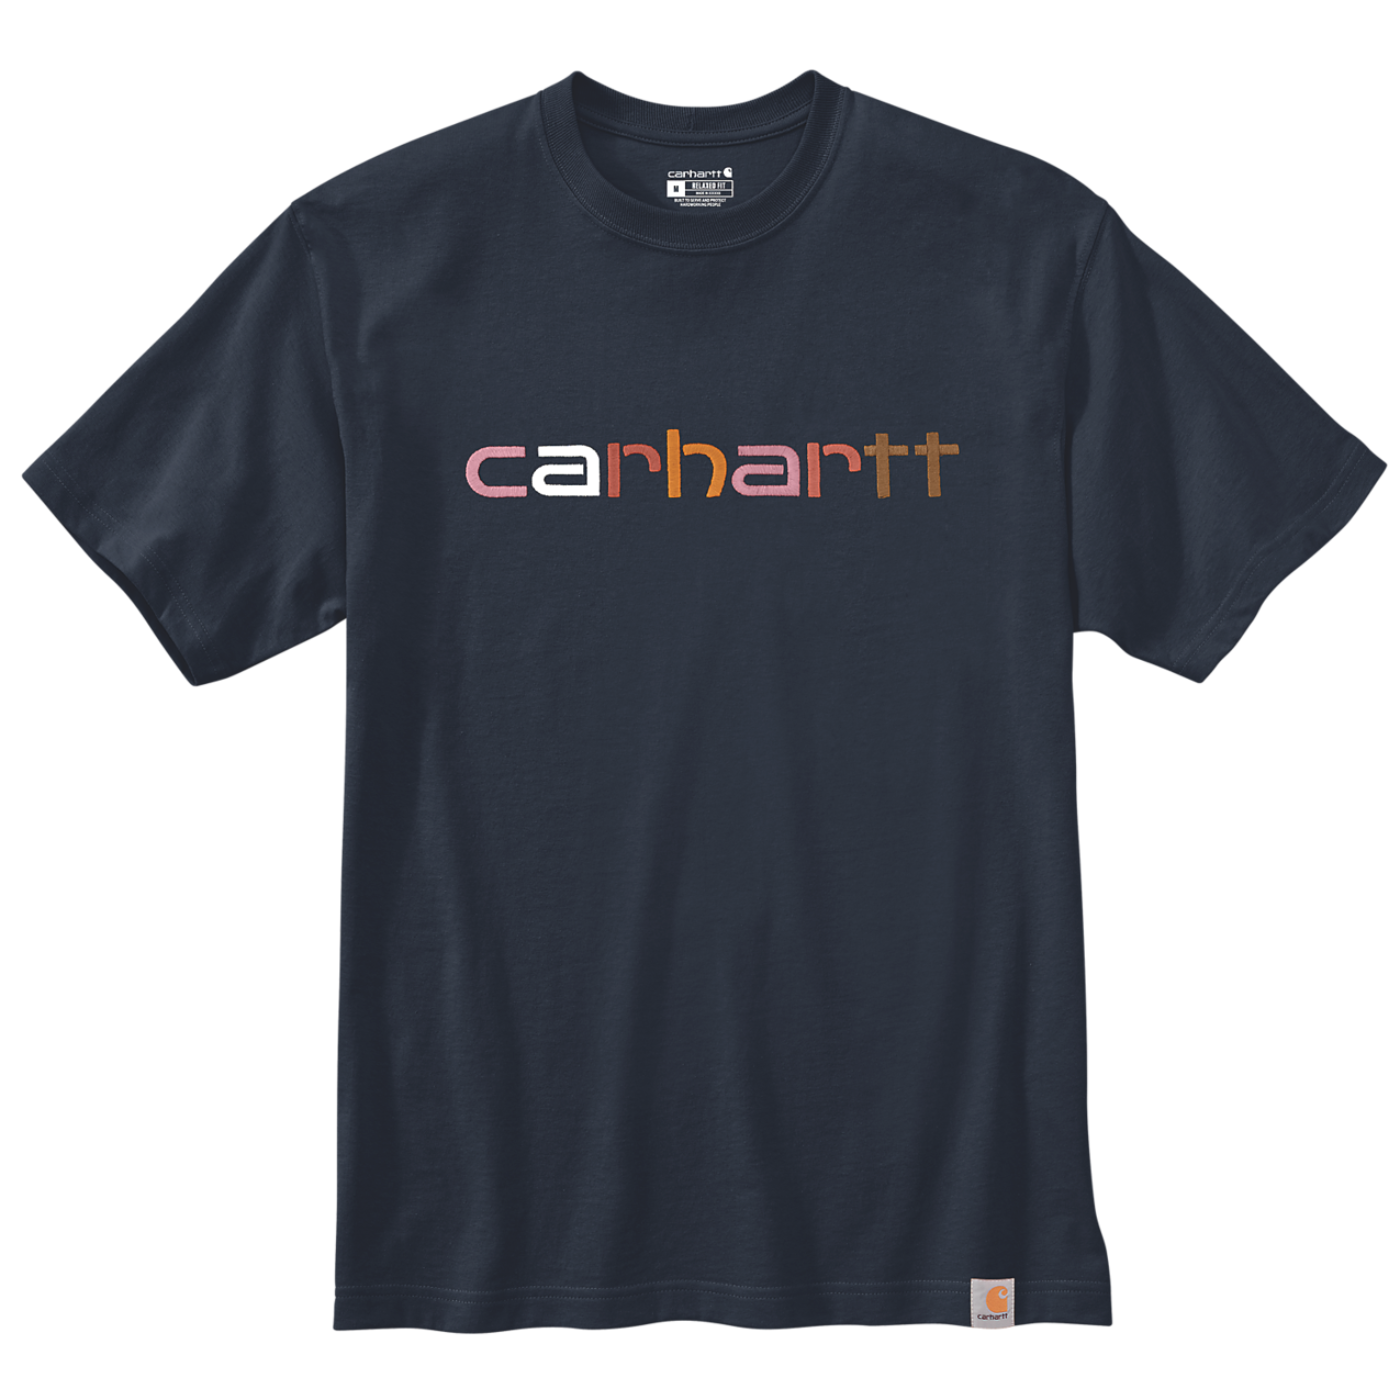 T-shirt with printed Carhartt logo